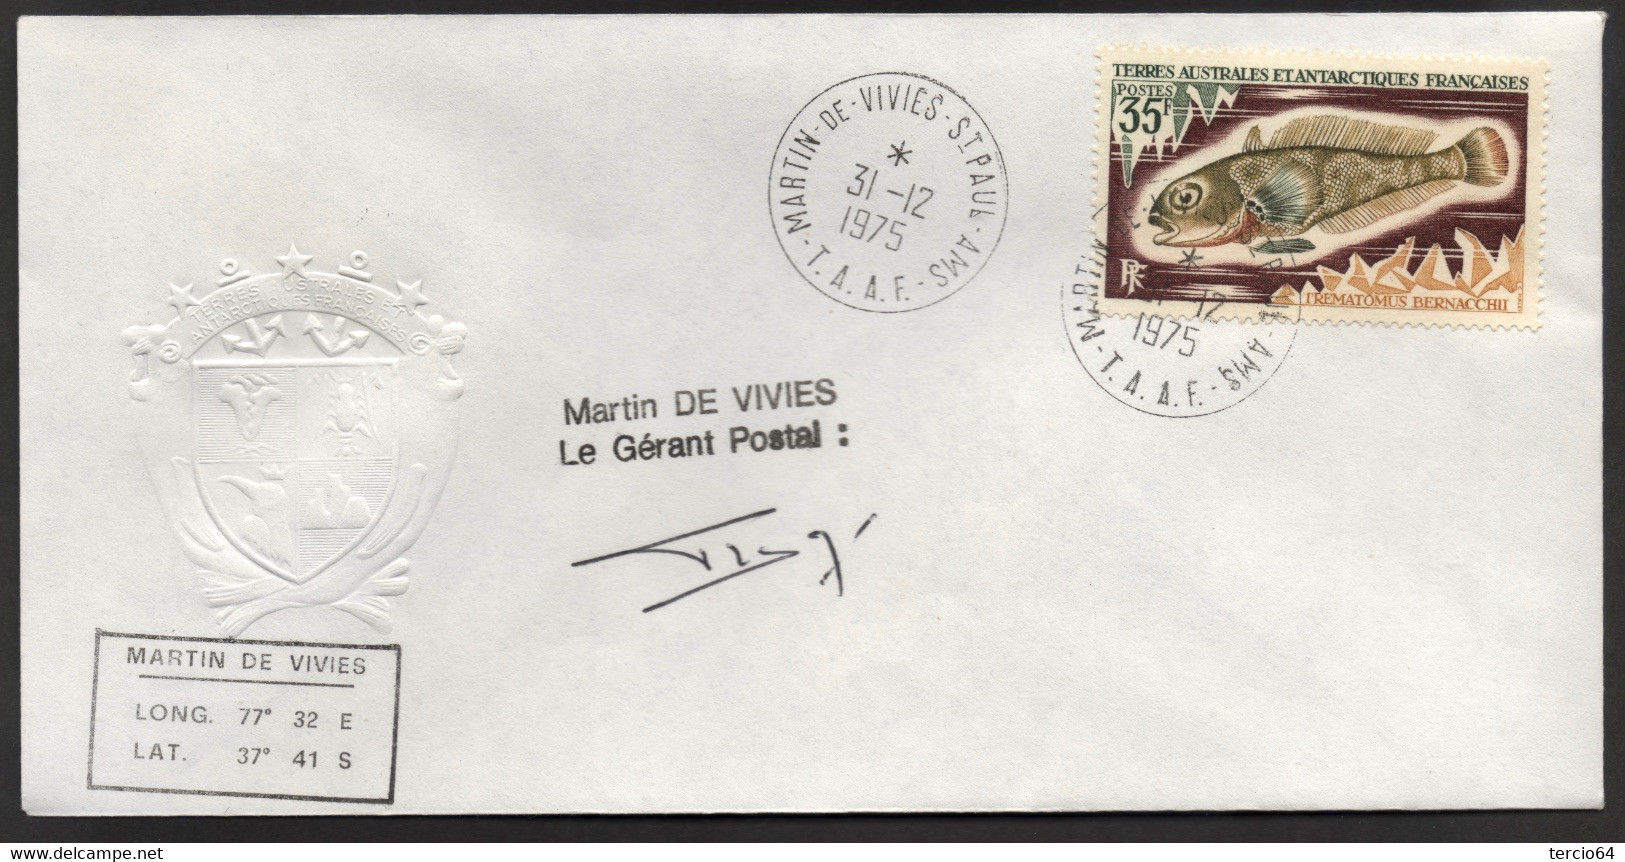 LOT  vrac TAAF PLUS DE 30 timbres seuls sur Lettre de Martin de Viviès cf scans TTB